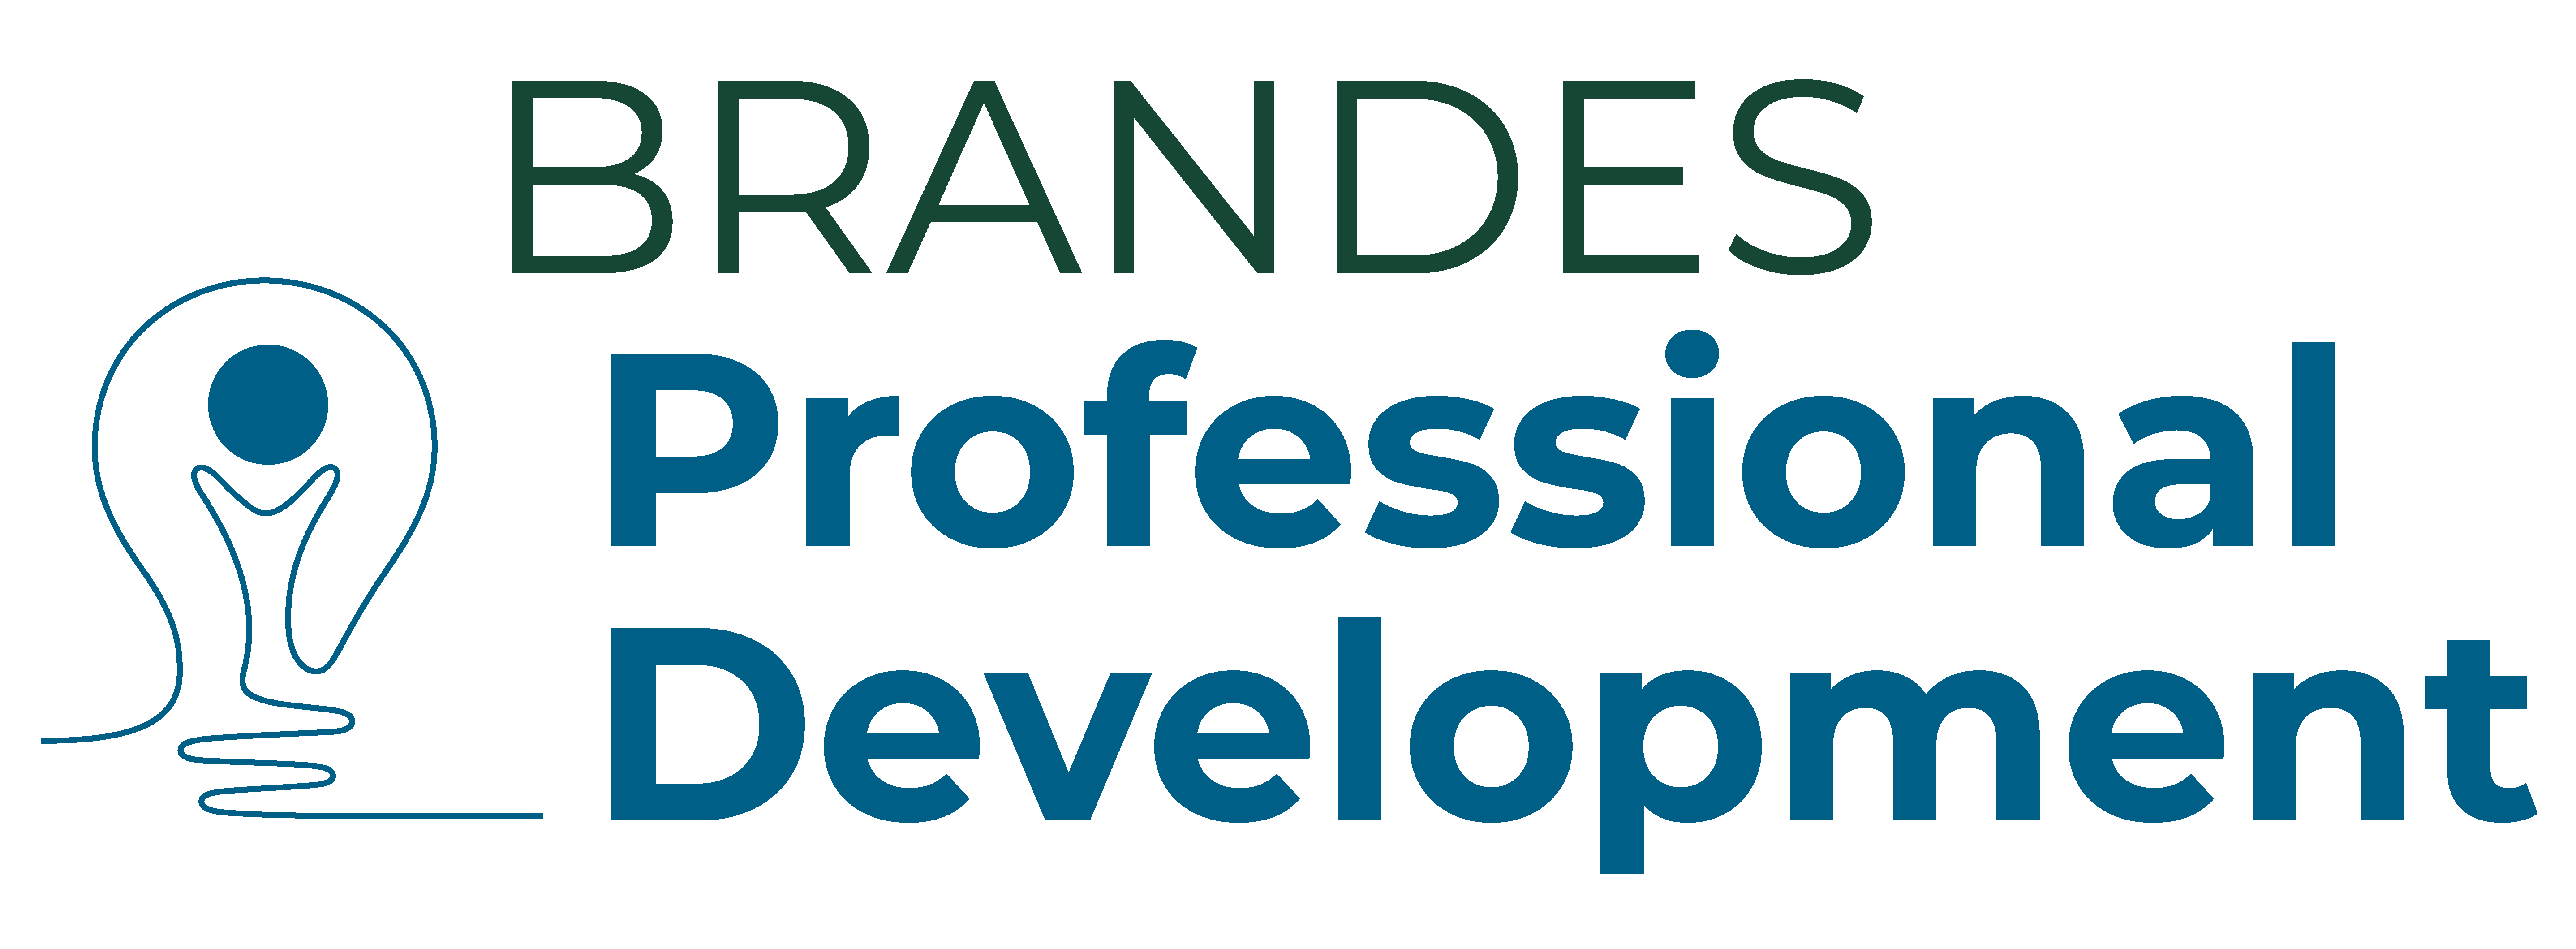 Brandes Professional Development